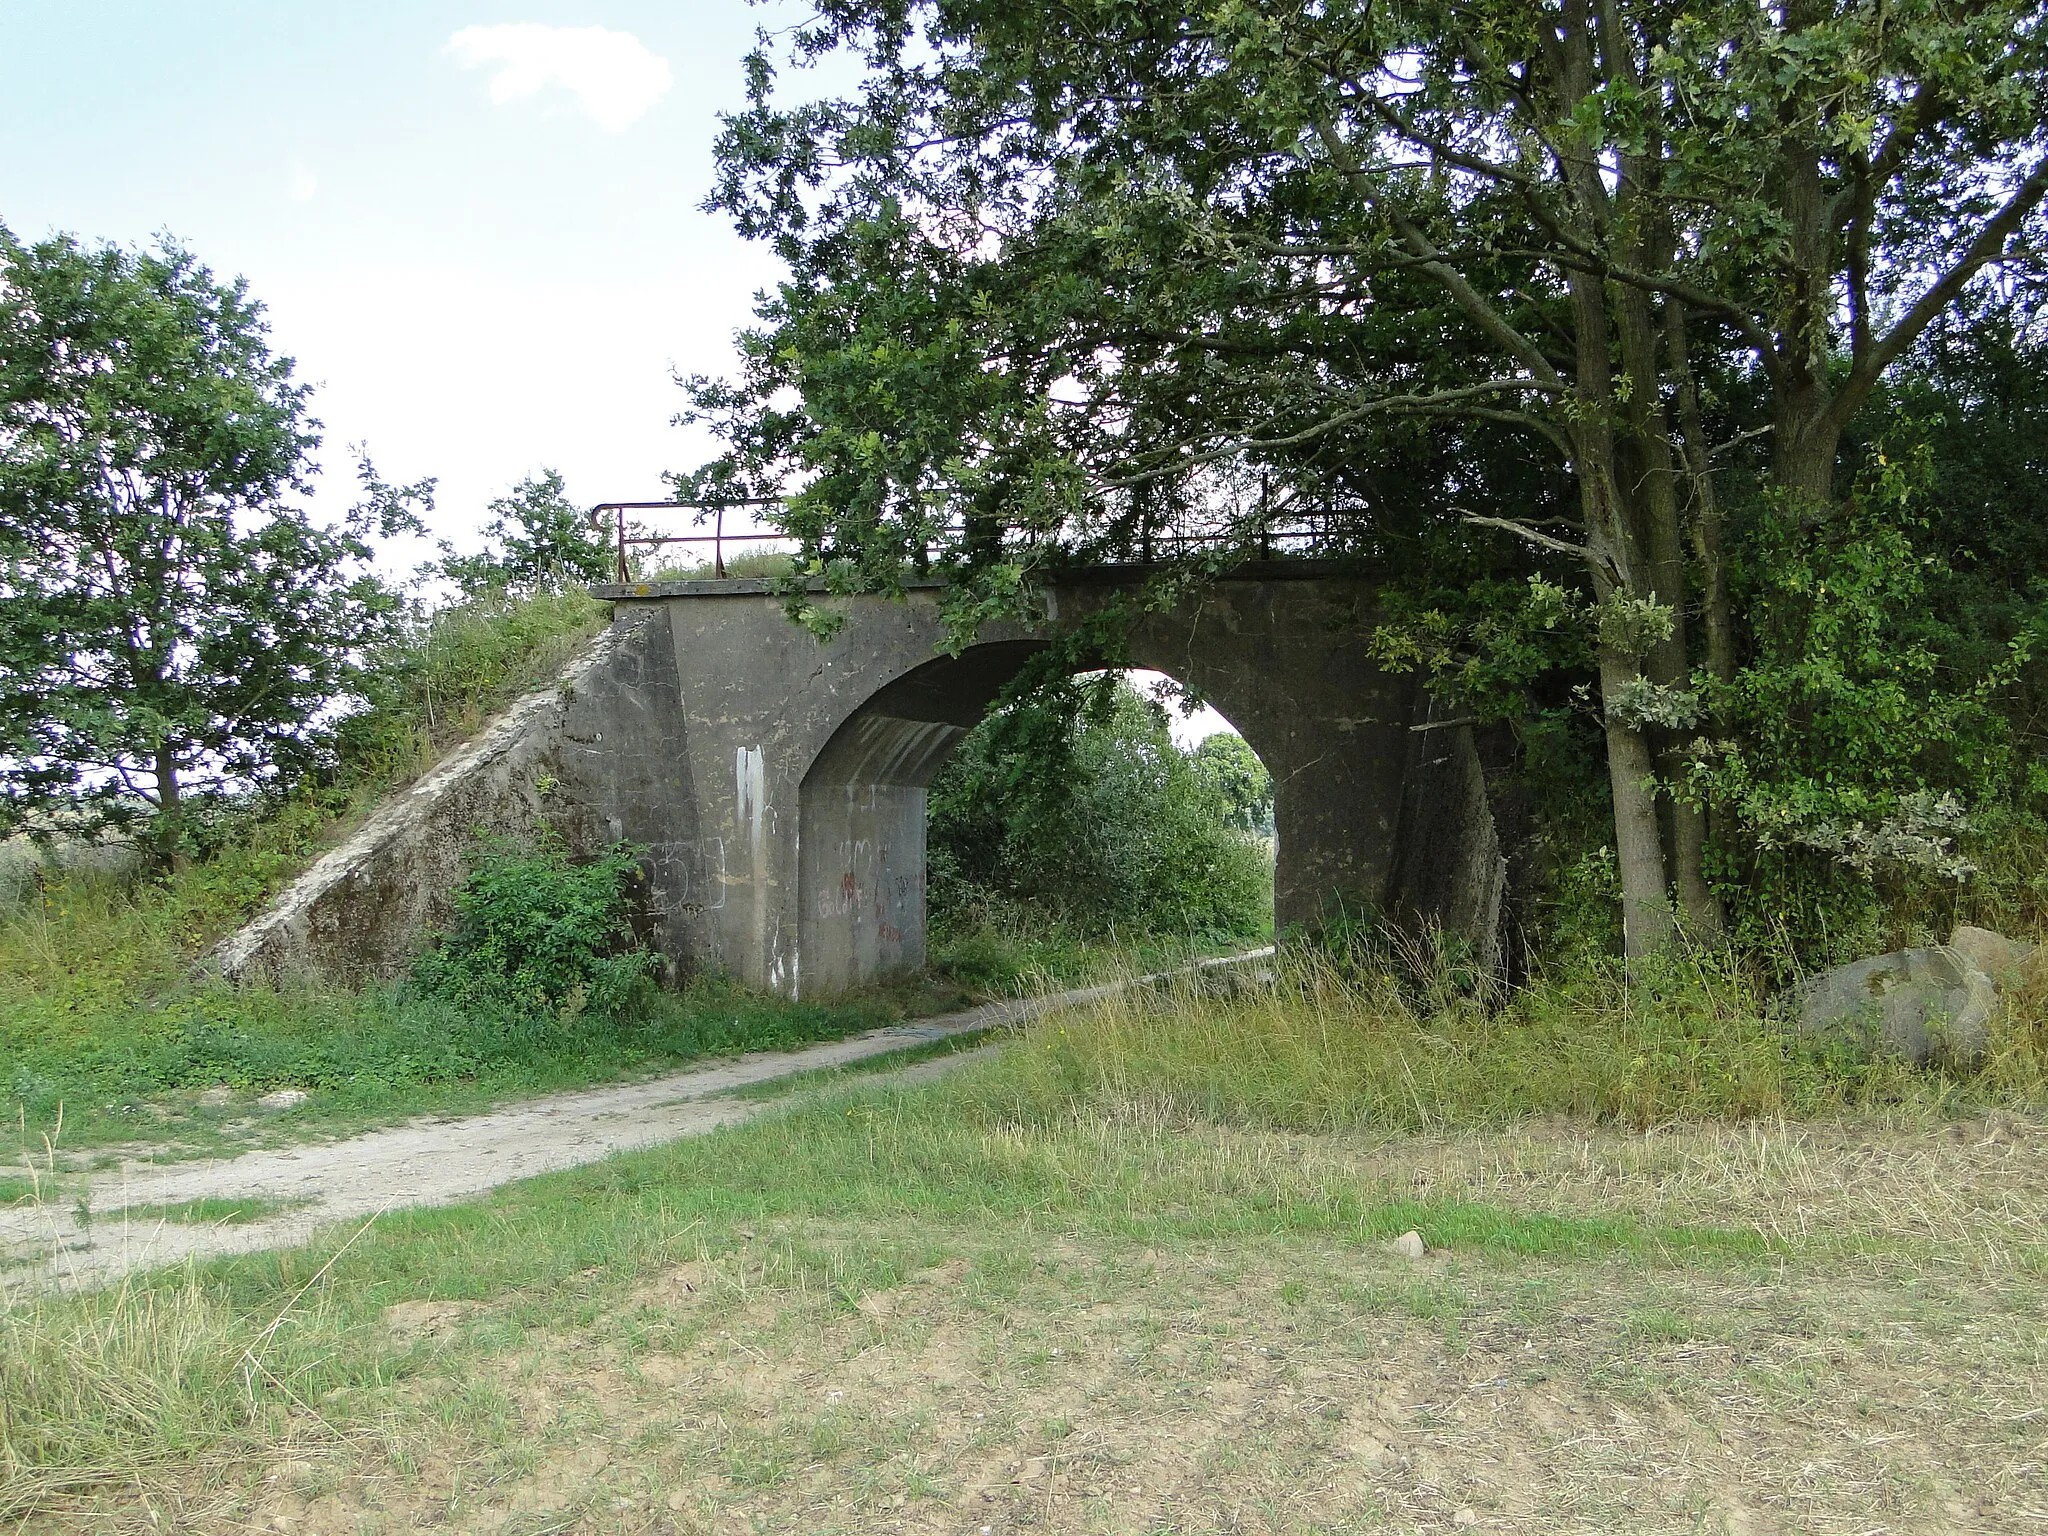 Photo showing: Unused railway brigde of the former rail track Pritzwalk-Suckow near Nettelbeck, disctrict Prignitz, Brandenburg, Germany